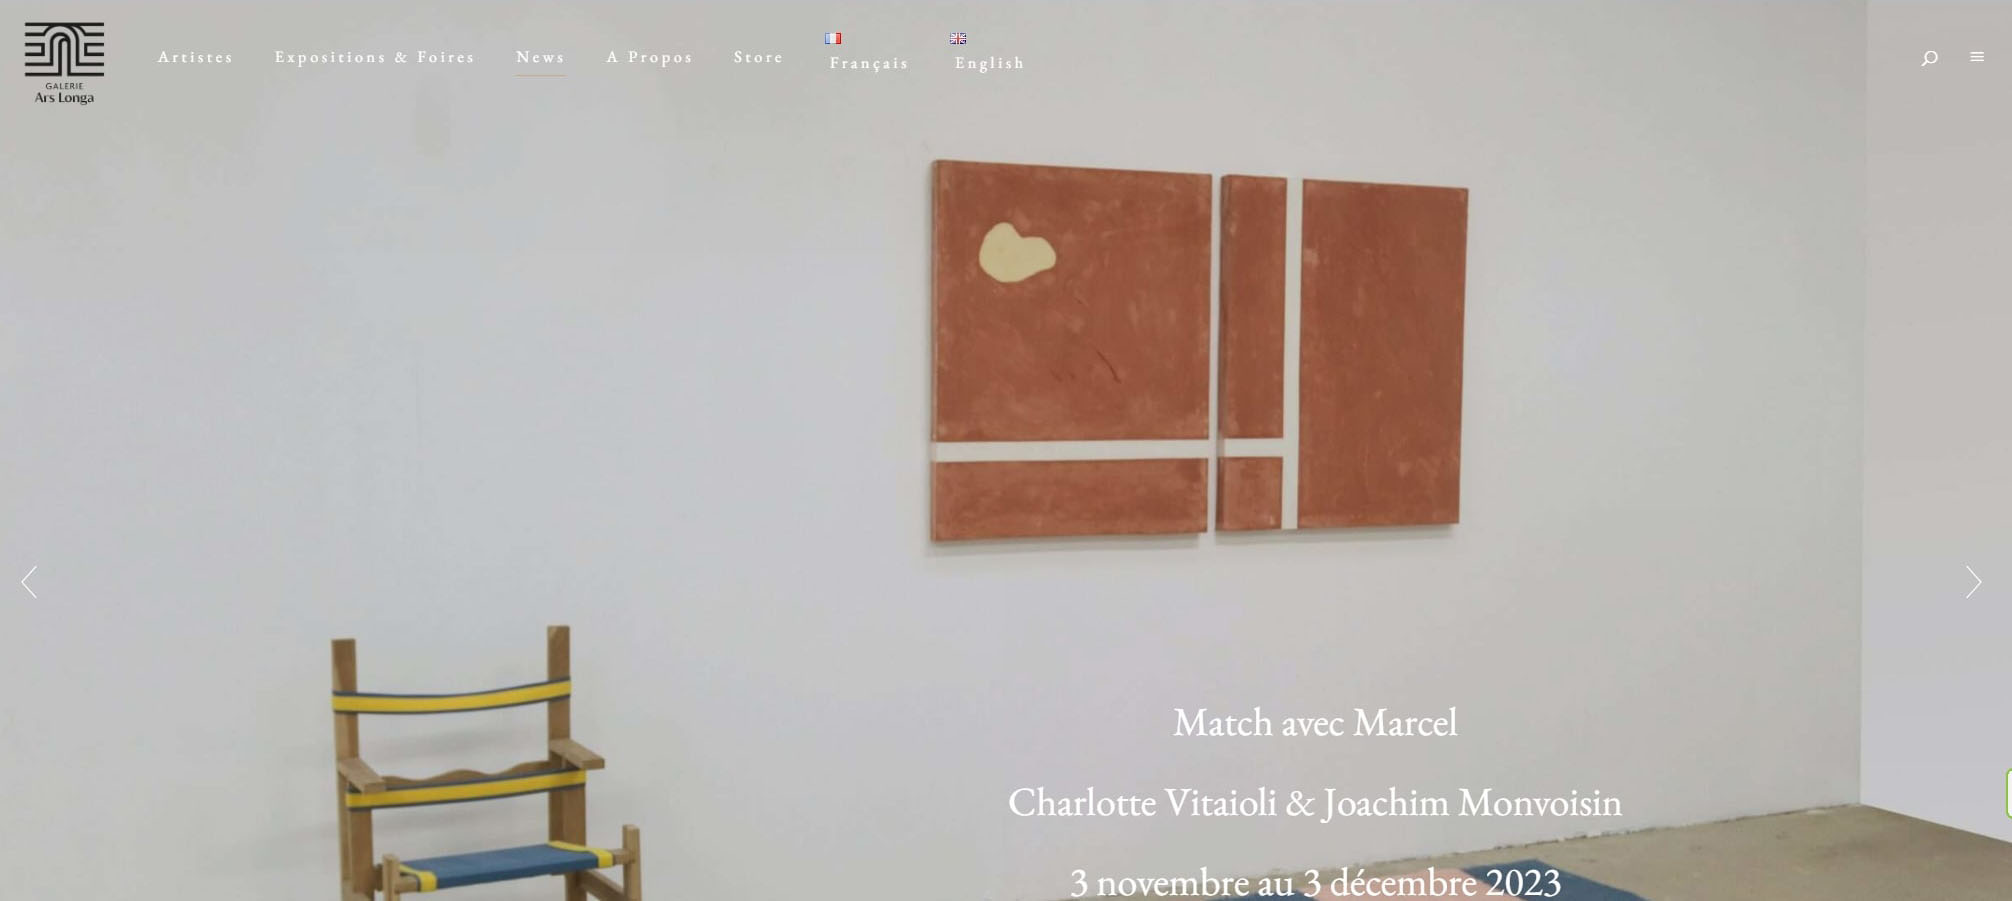 Création de site internet - agence de communication digitale à La Ciotat - La Galerie Ars Longa